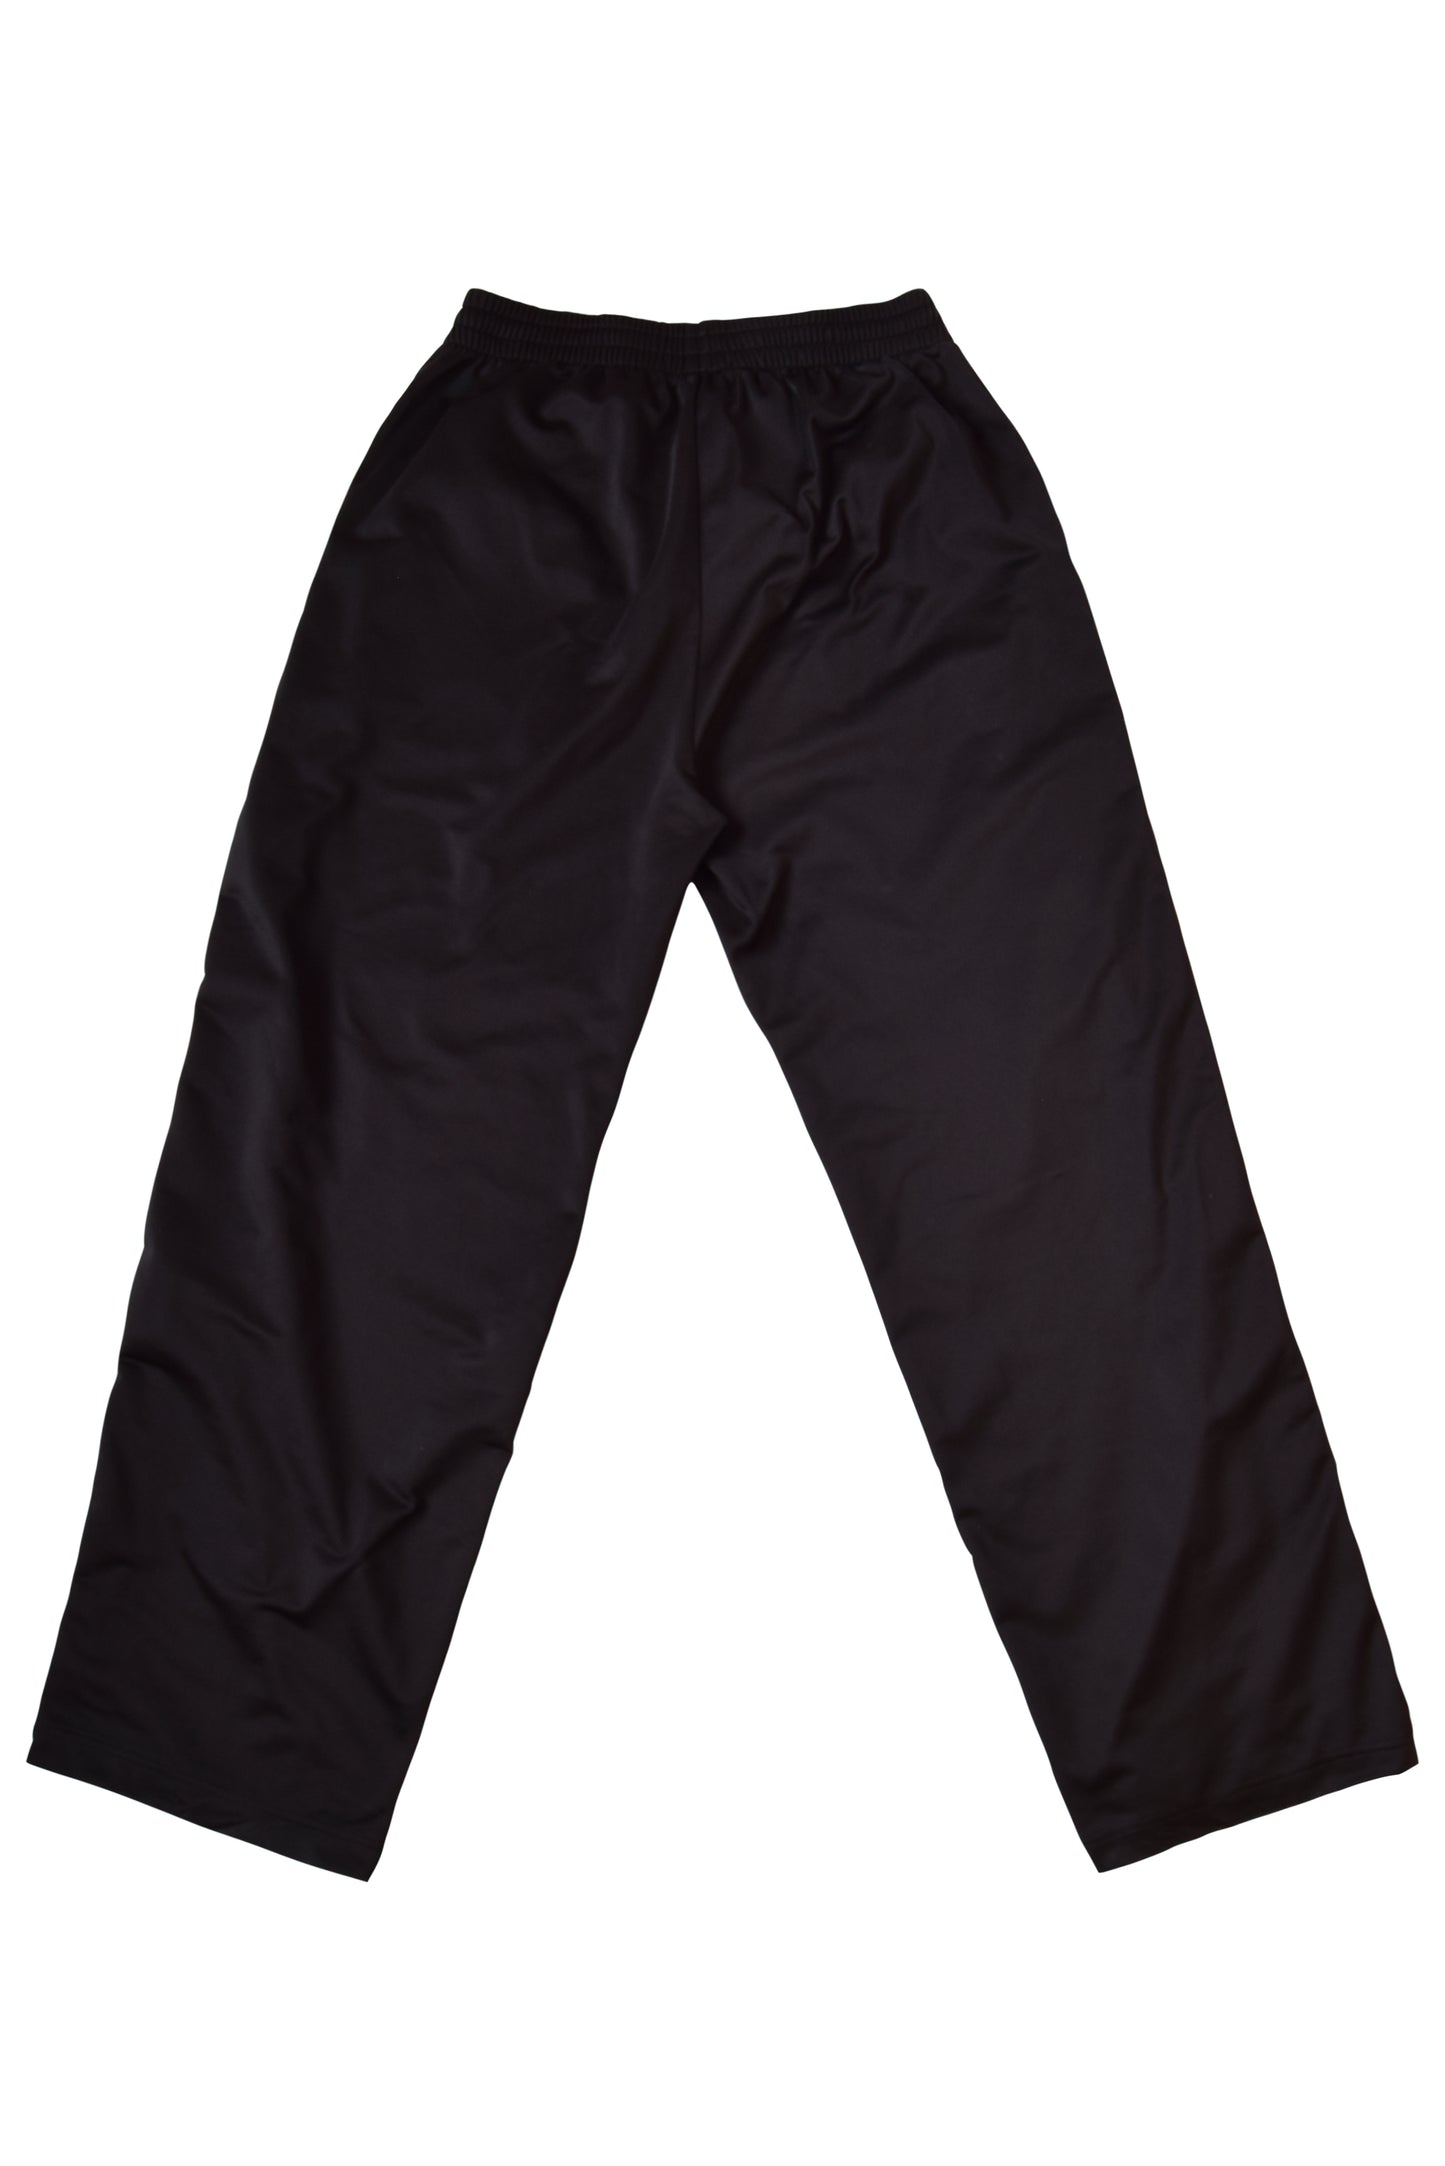 Vintage Kappa Popper Track Pants 90's Black Size XL